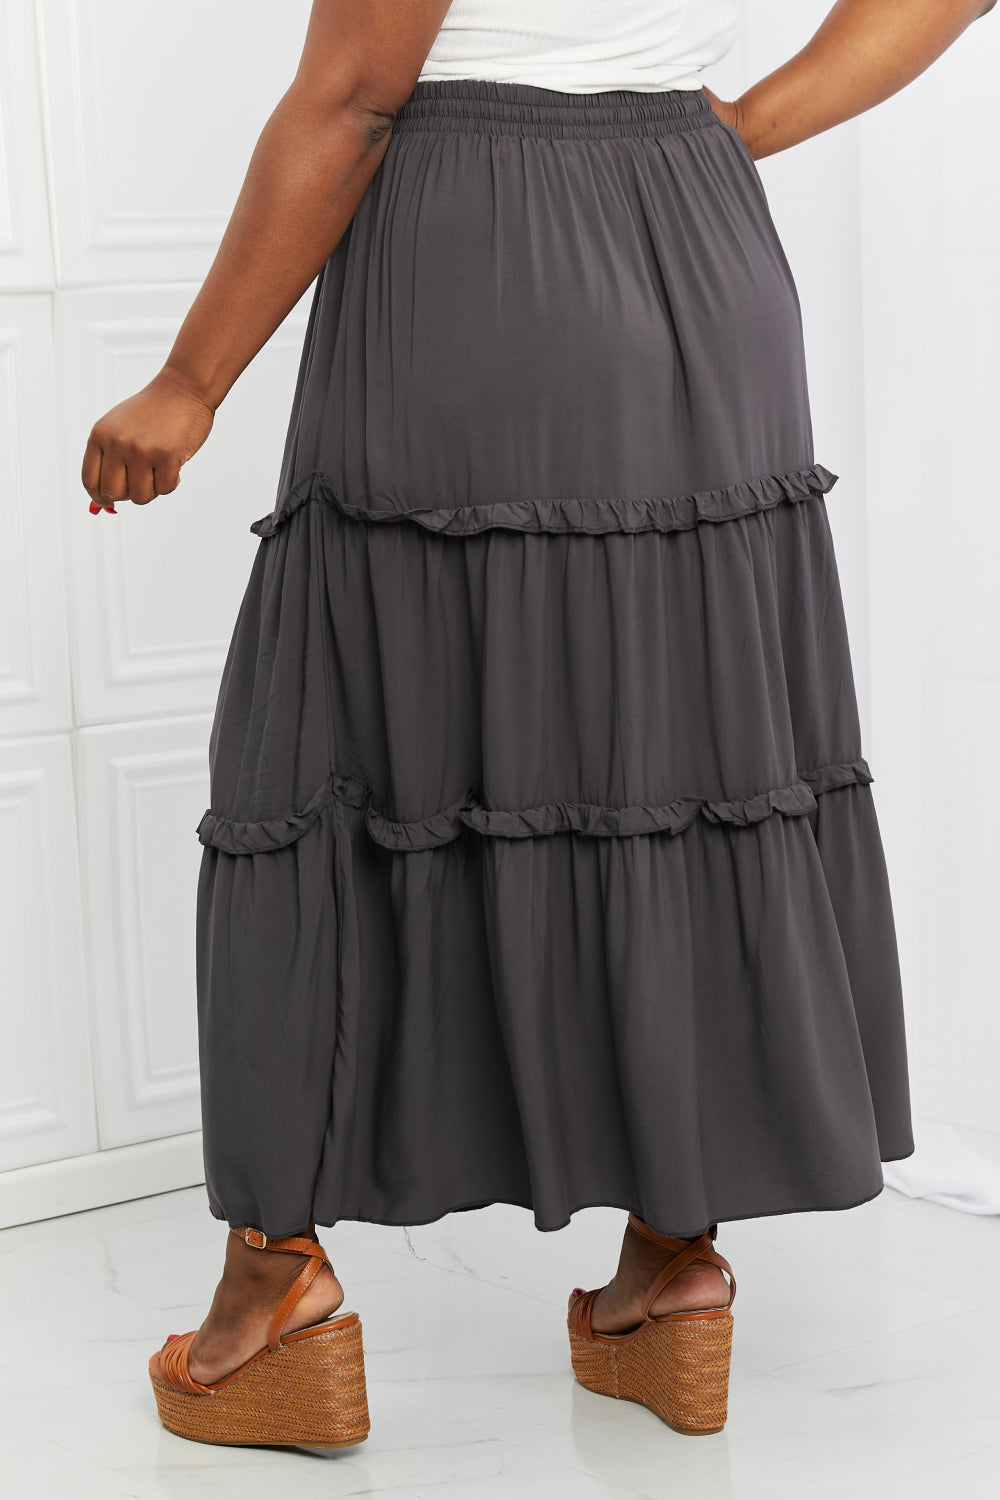 Zenana Summer Days Full Size Ruffled Maxi Skirt in Ash Grey - Cheeky Chic Boutique